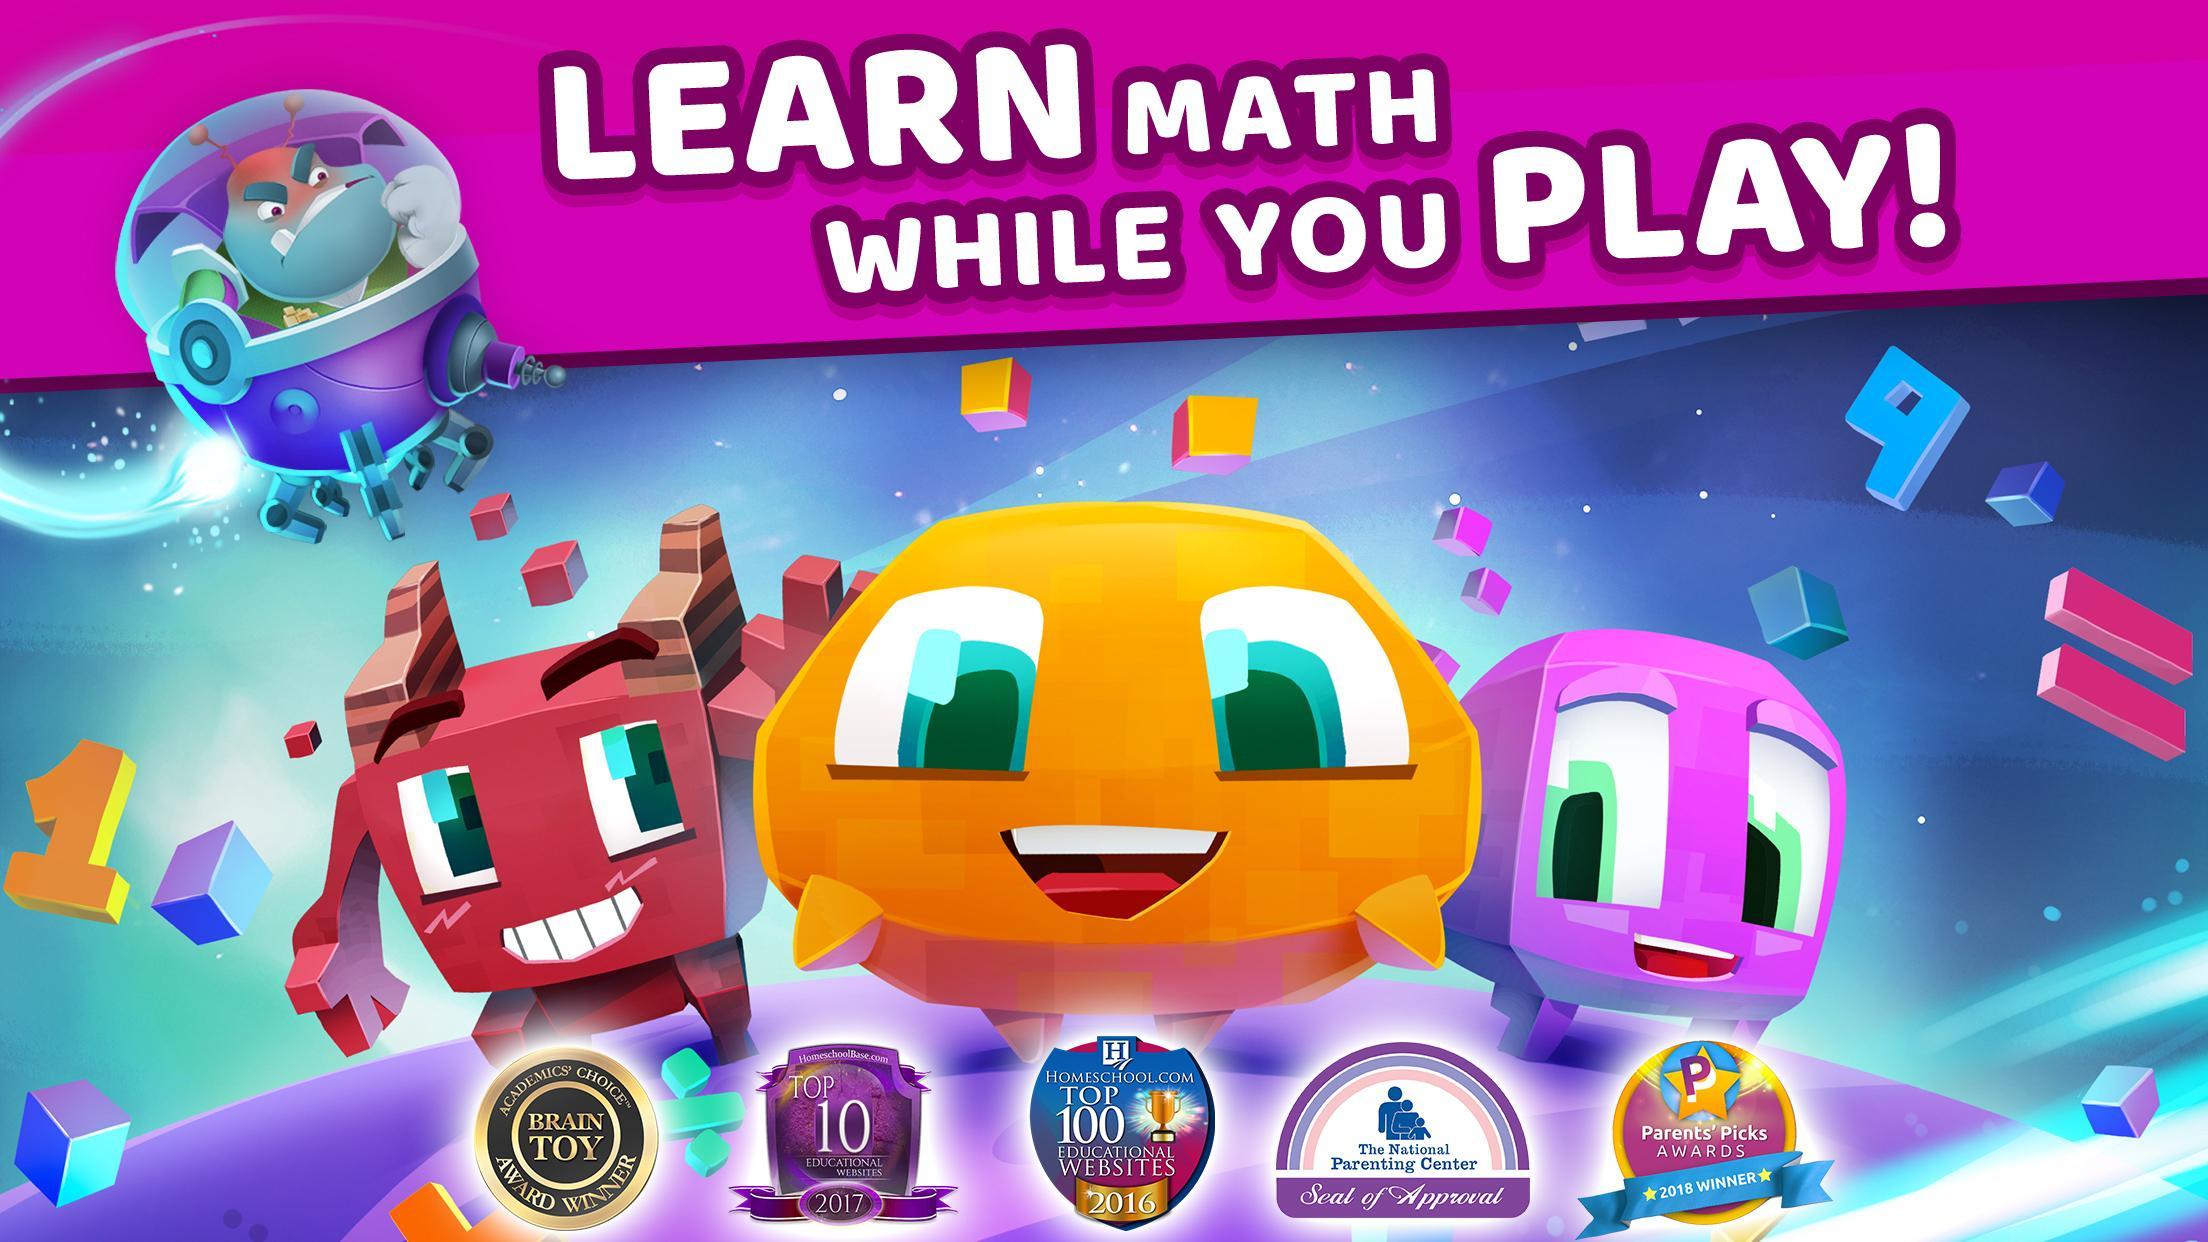 Matific Galaxy - Maths Games for 5th Graders 2.2.2 Screenshot 13